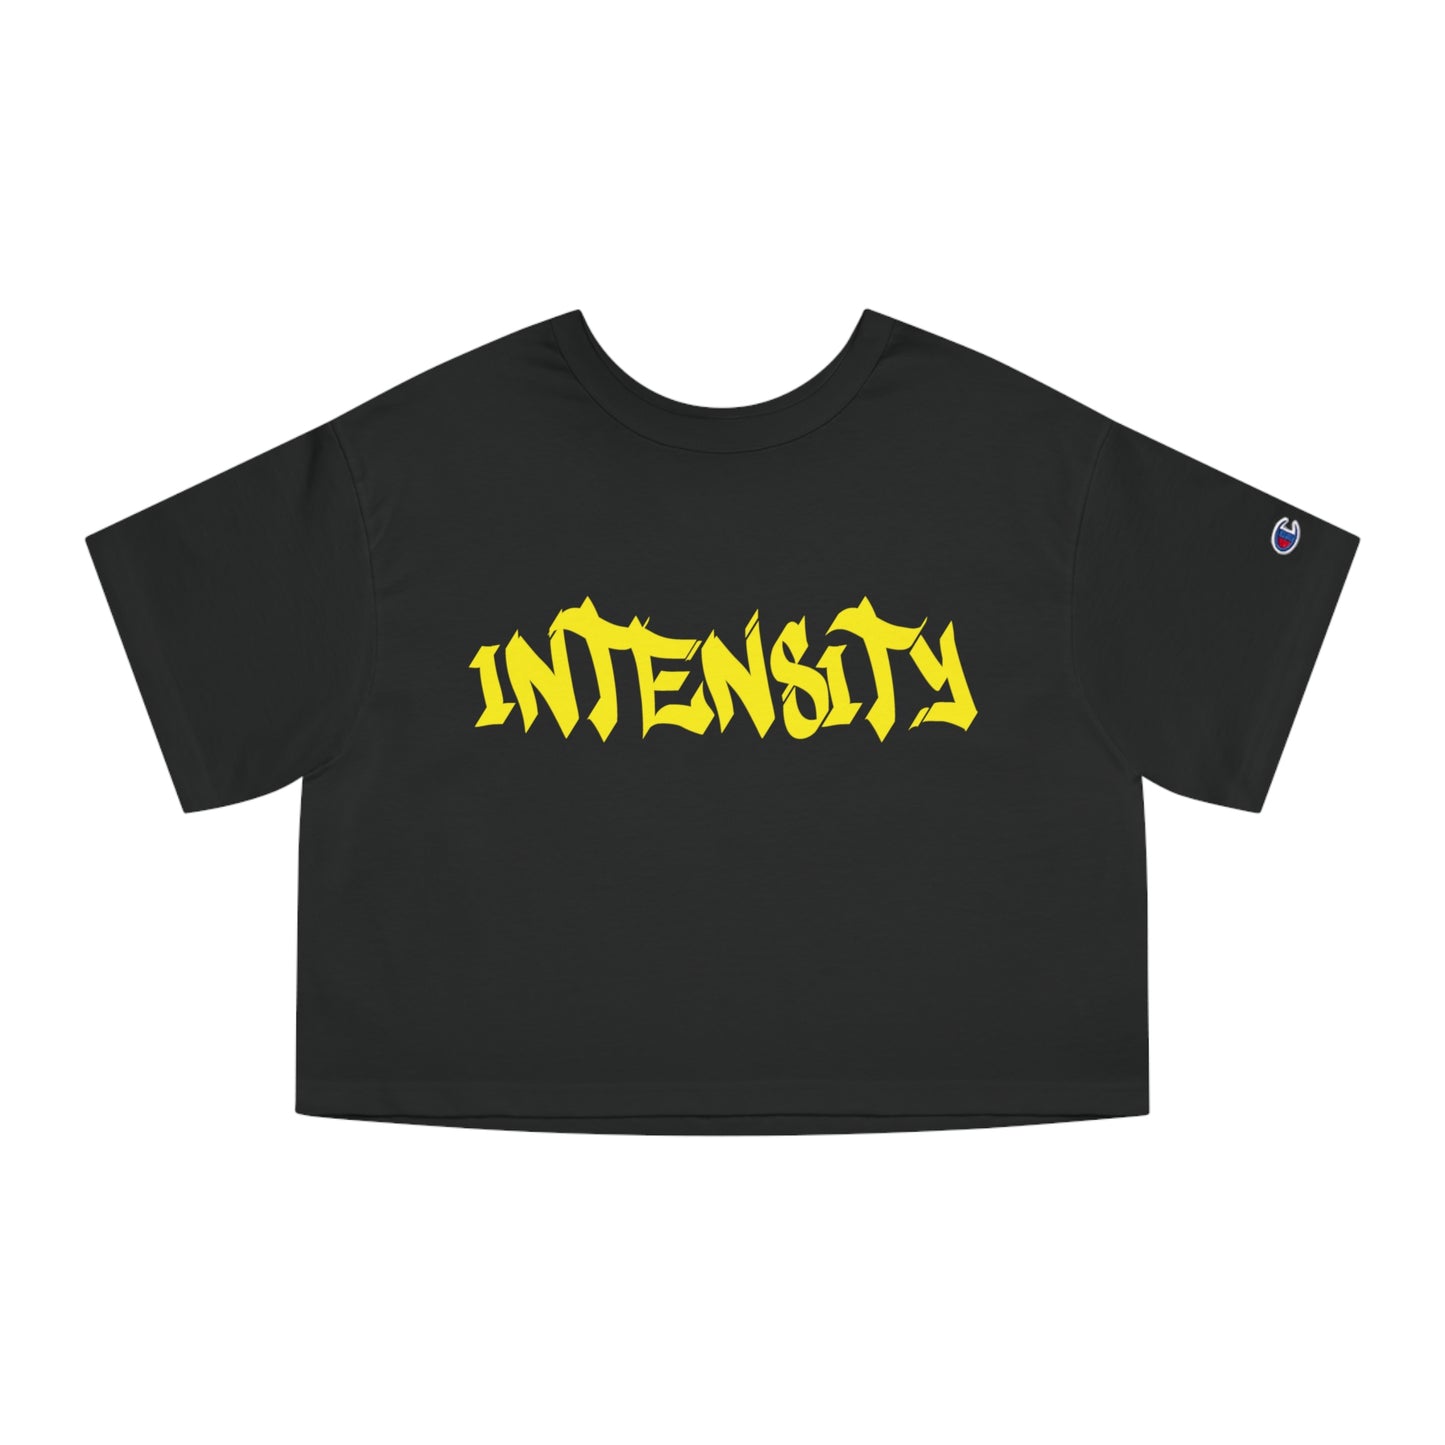 Women's "INTENSITY" Crop Top T-Shirt (Yellow)